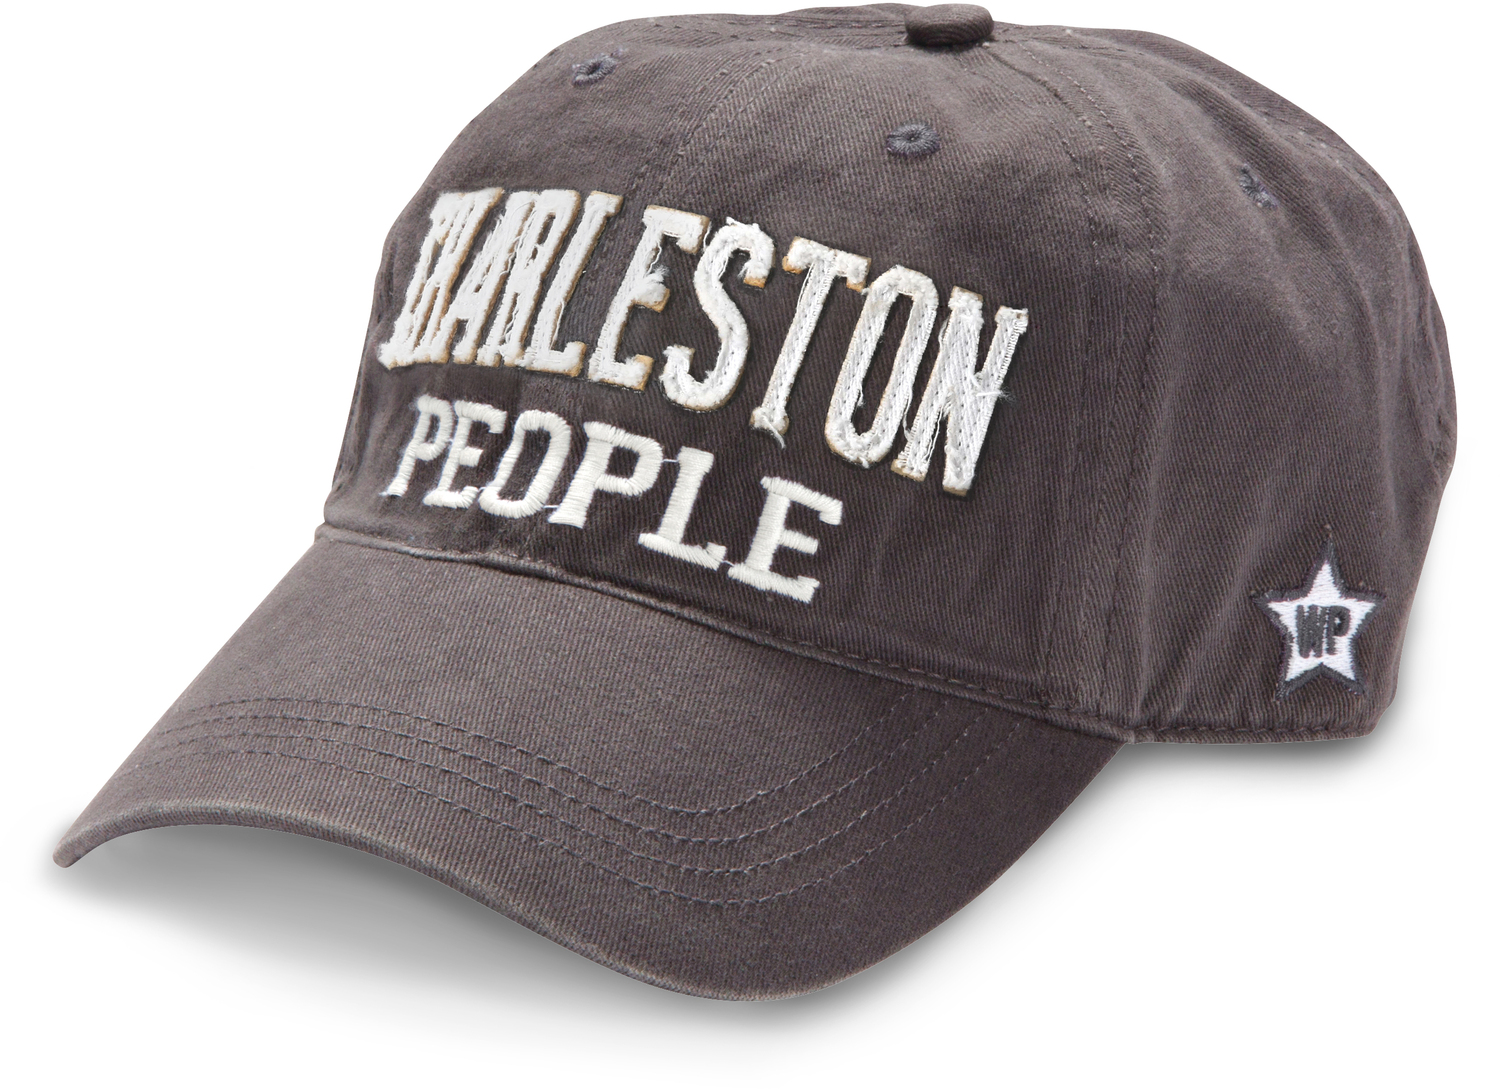 Charleston People by We People - Charleston People - Dark Gray Adjustable Hat